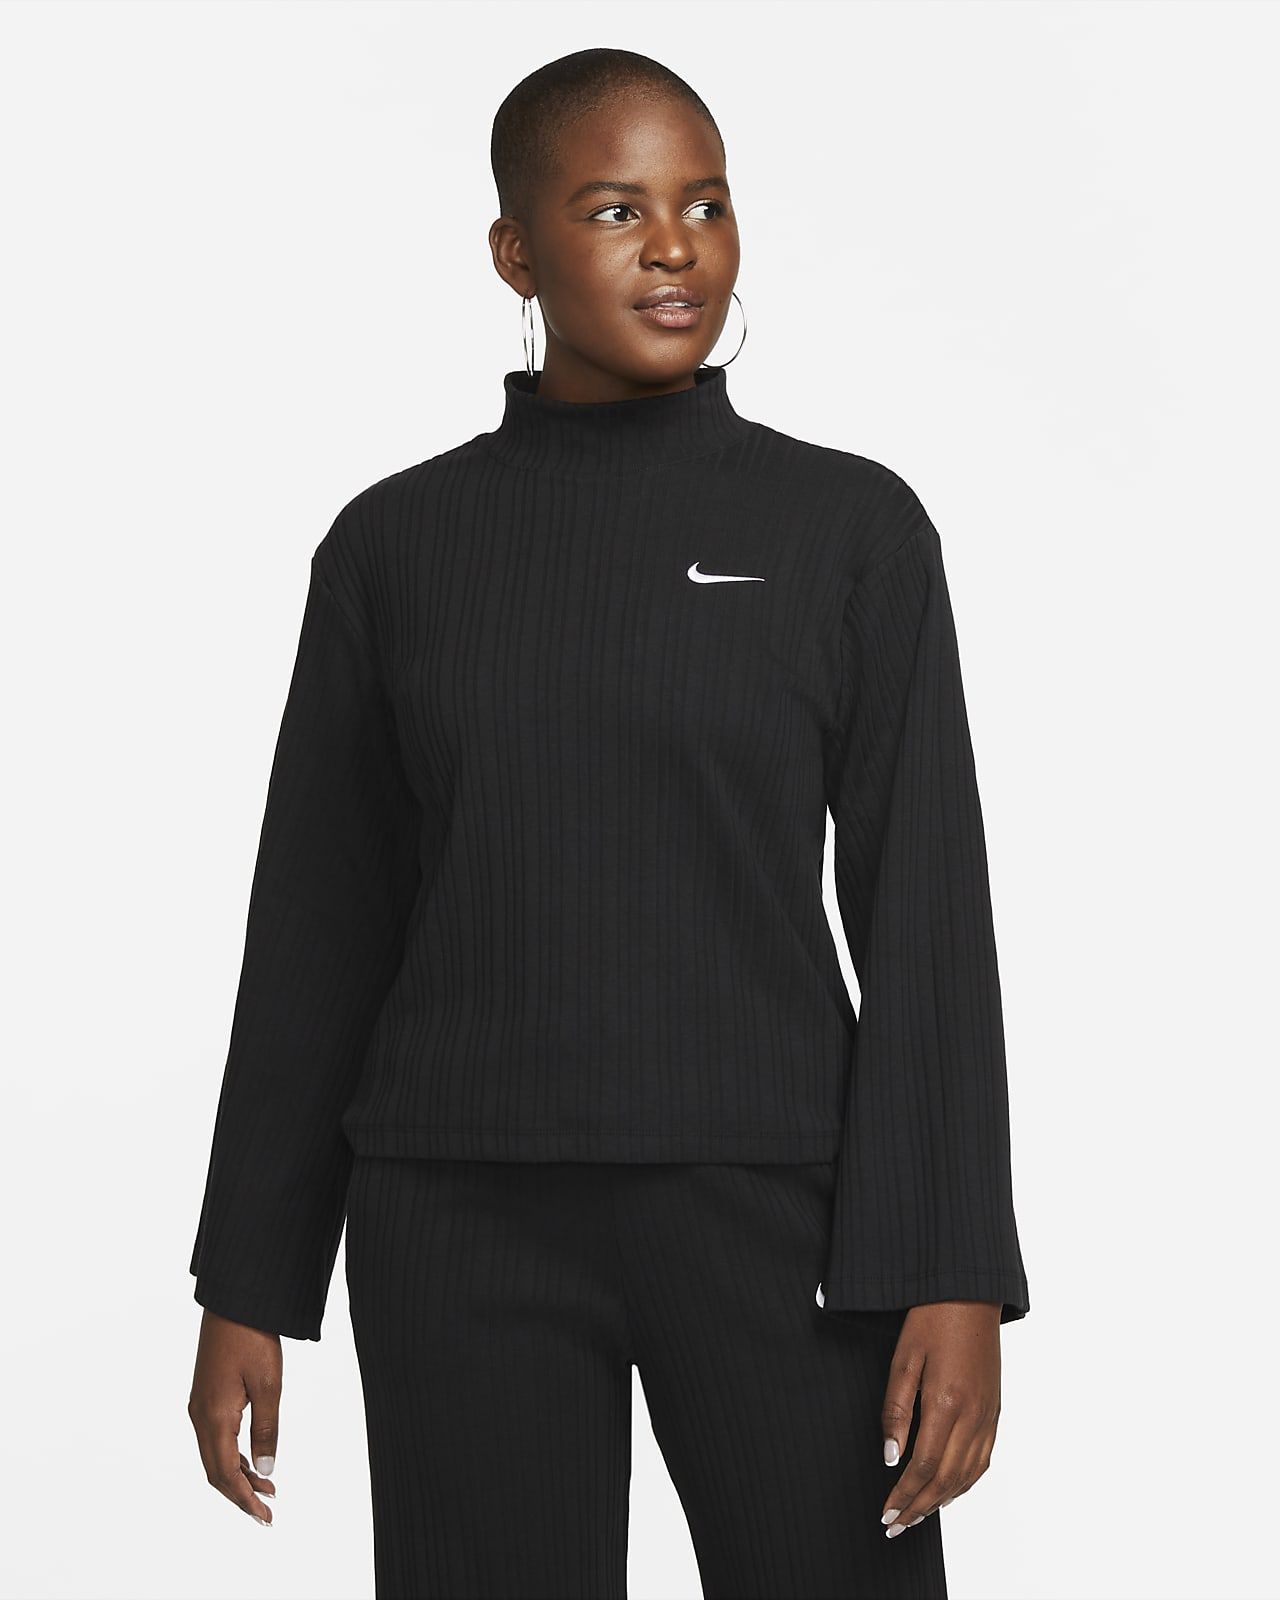 Nike Sportswear Women's Ribbed Jersey Long-Sleeve Top. Nike.com | Nike (US)